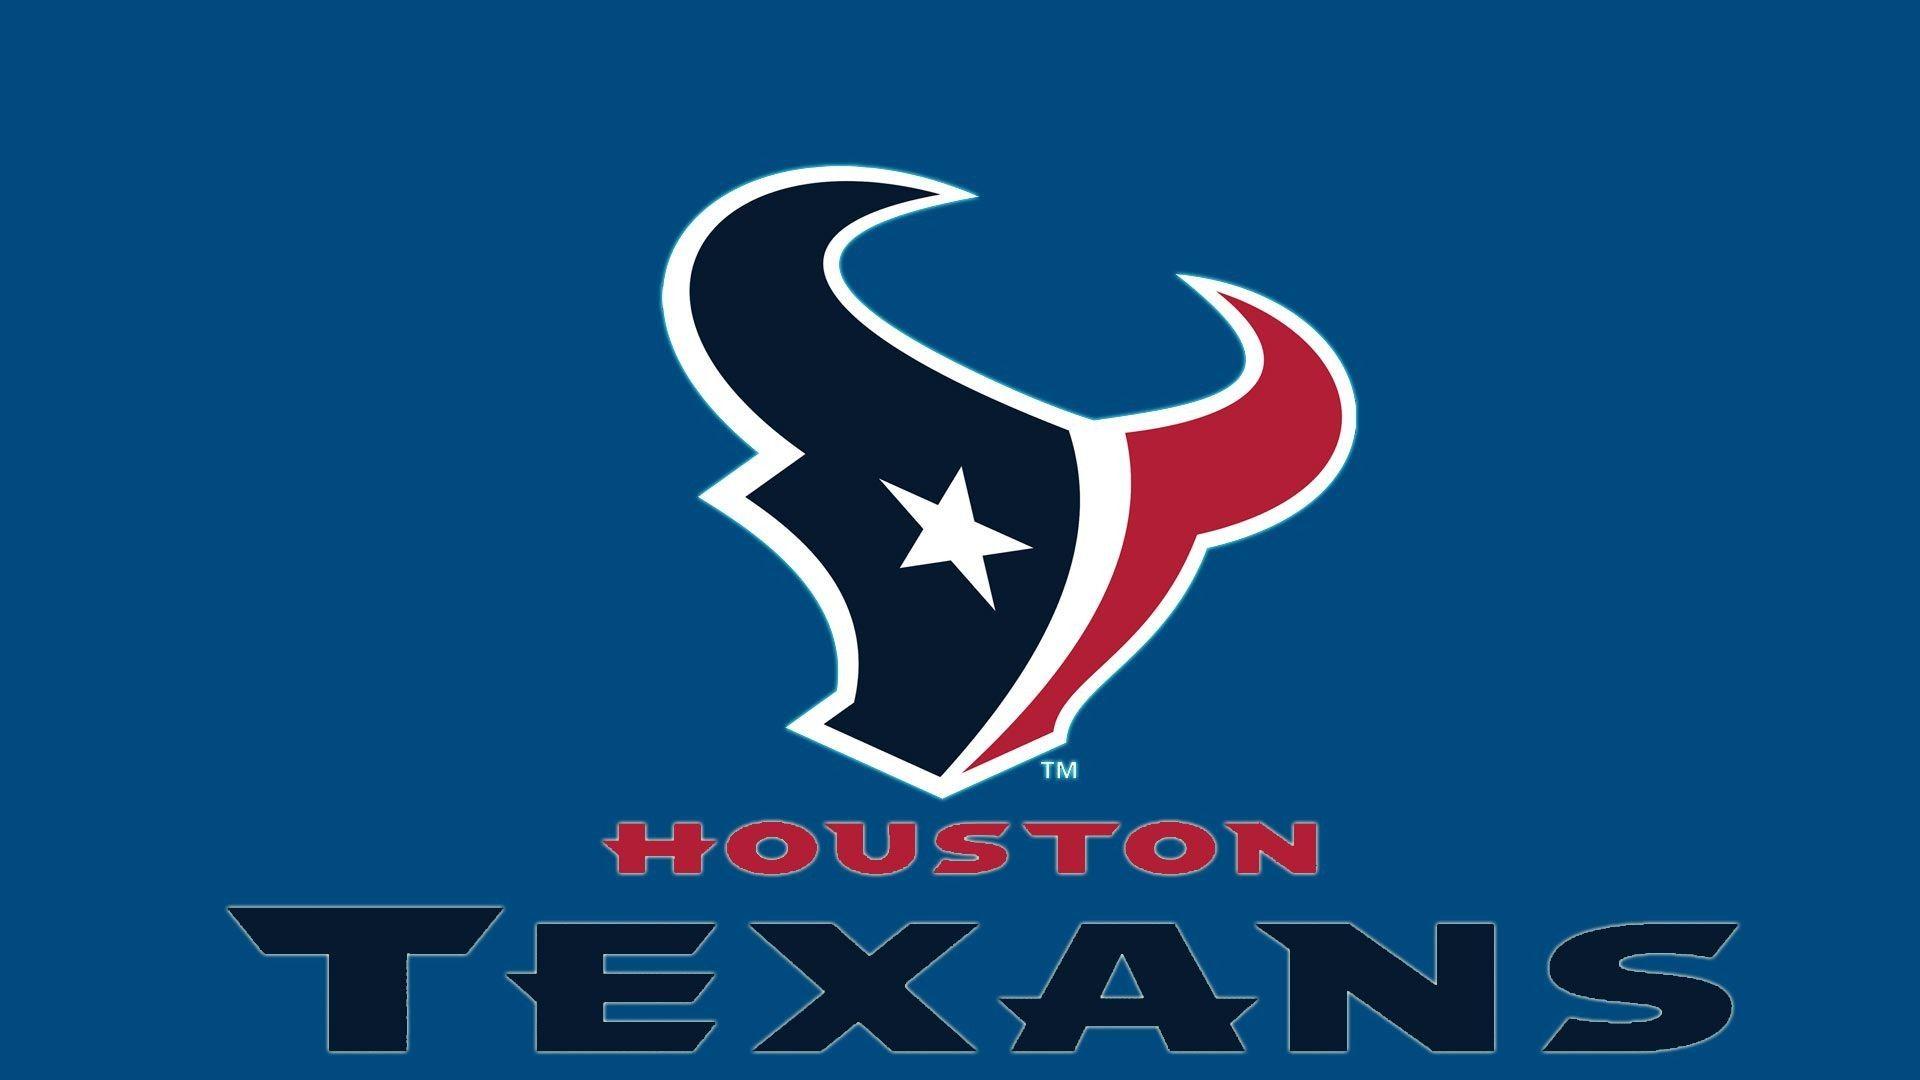 Houston Texans Desktop Wallpaper. Texans, Football wallpaper